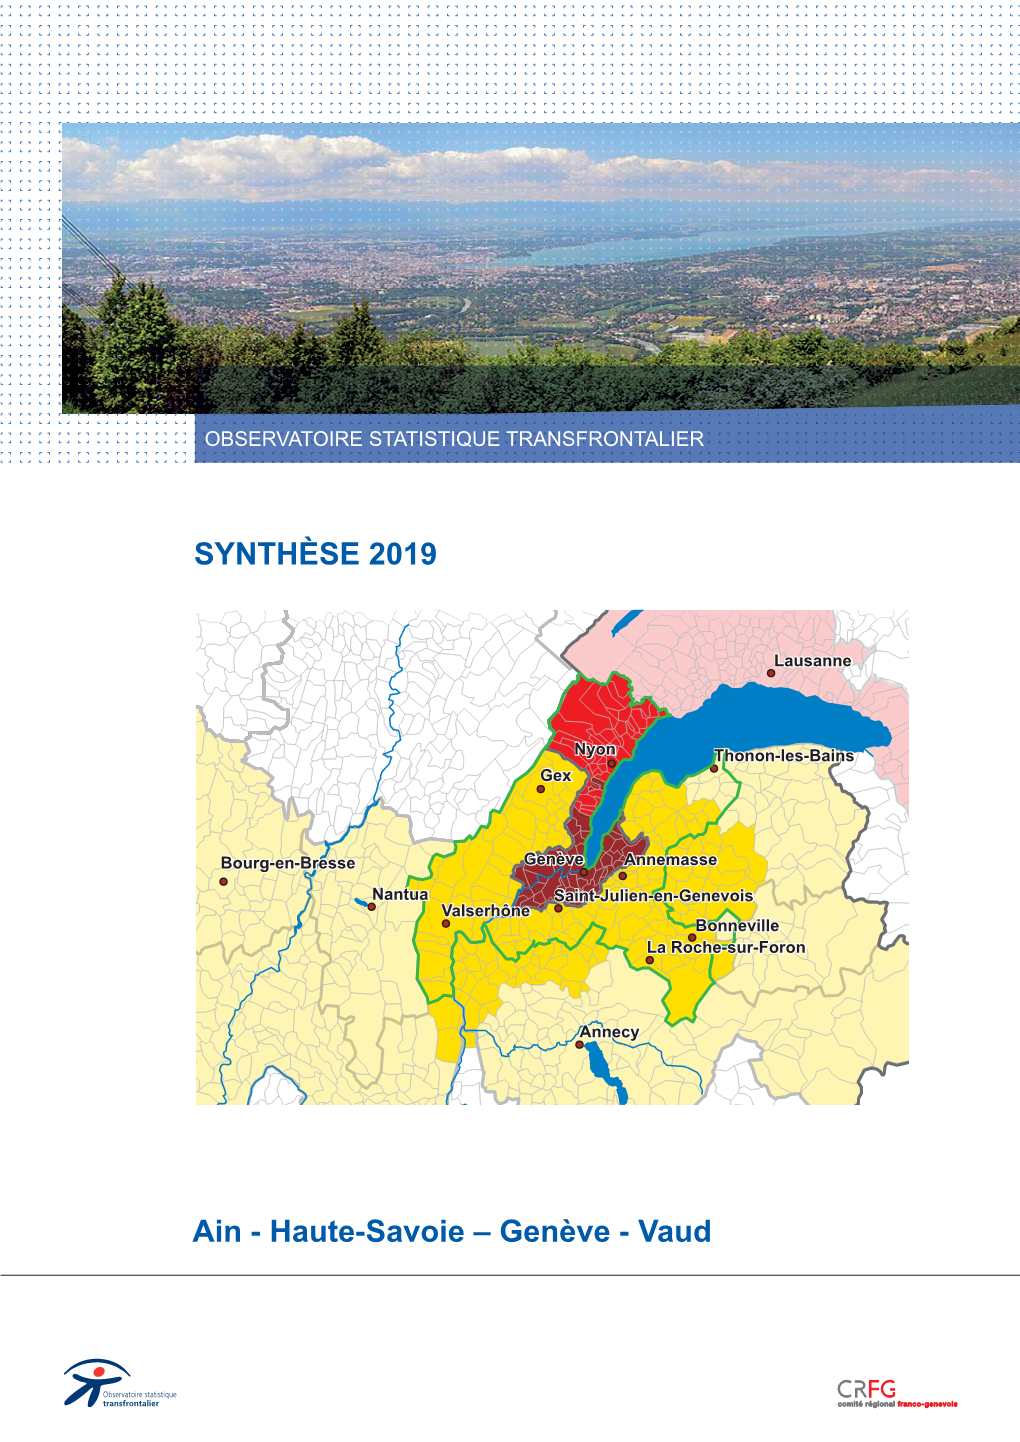 Observatoire Statistique Transfrontalier, Synthèse 2019